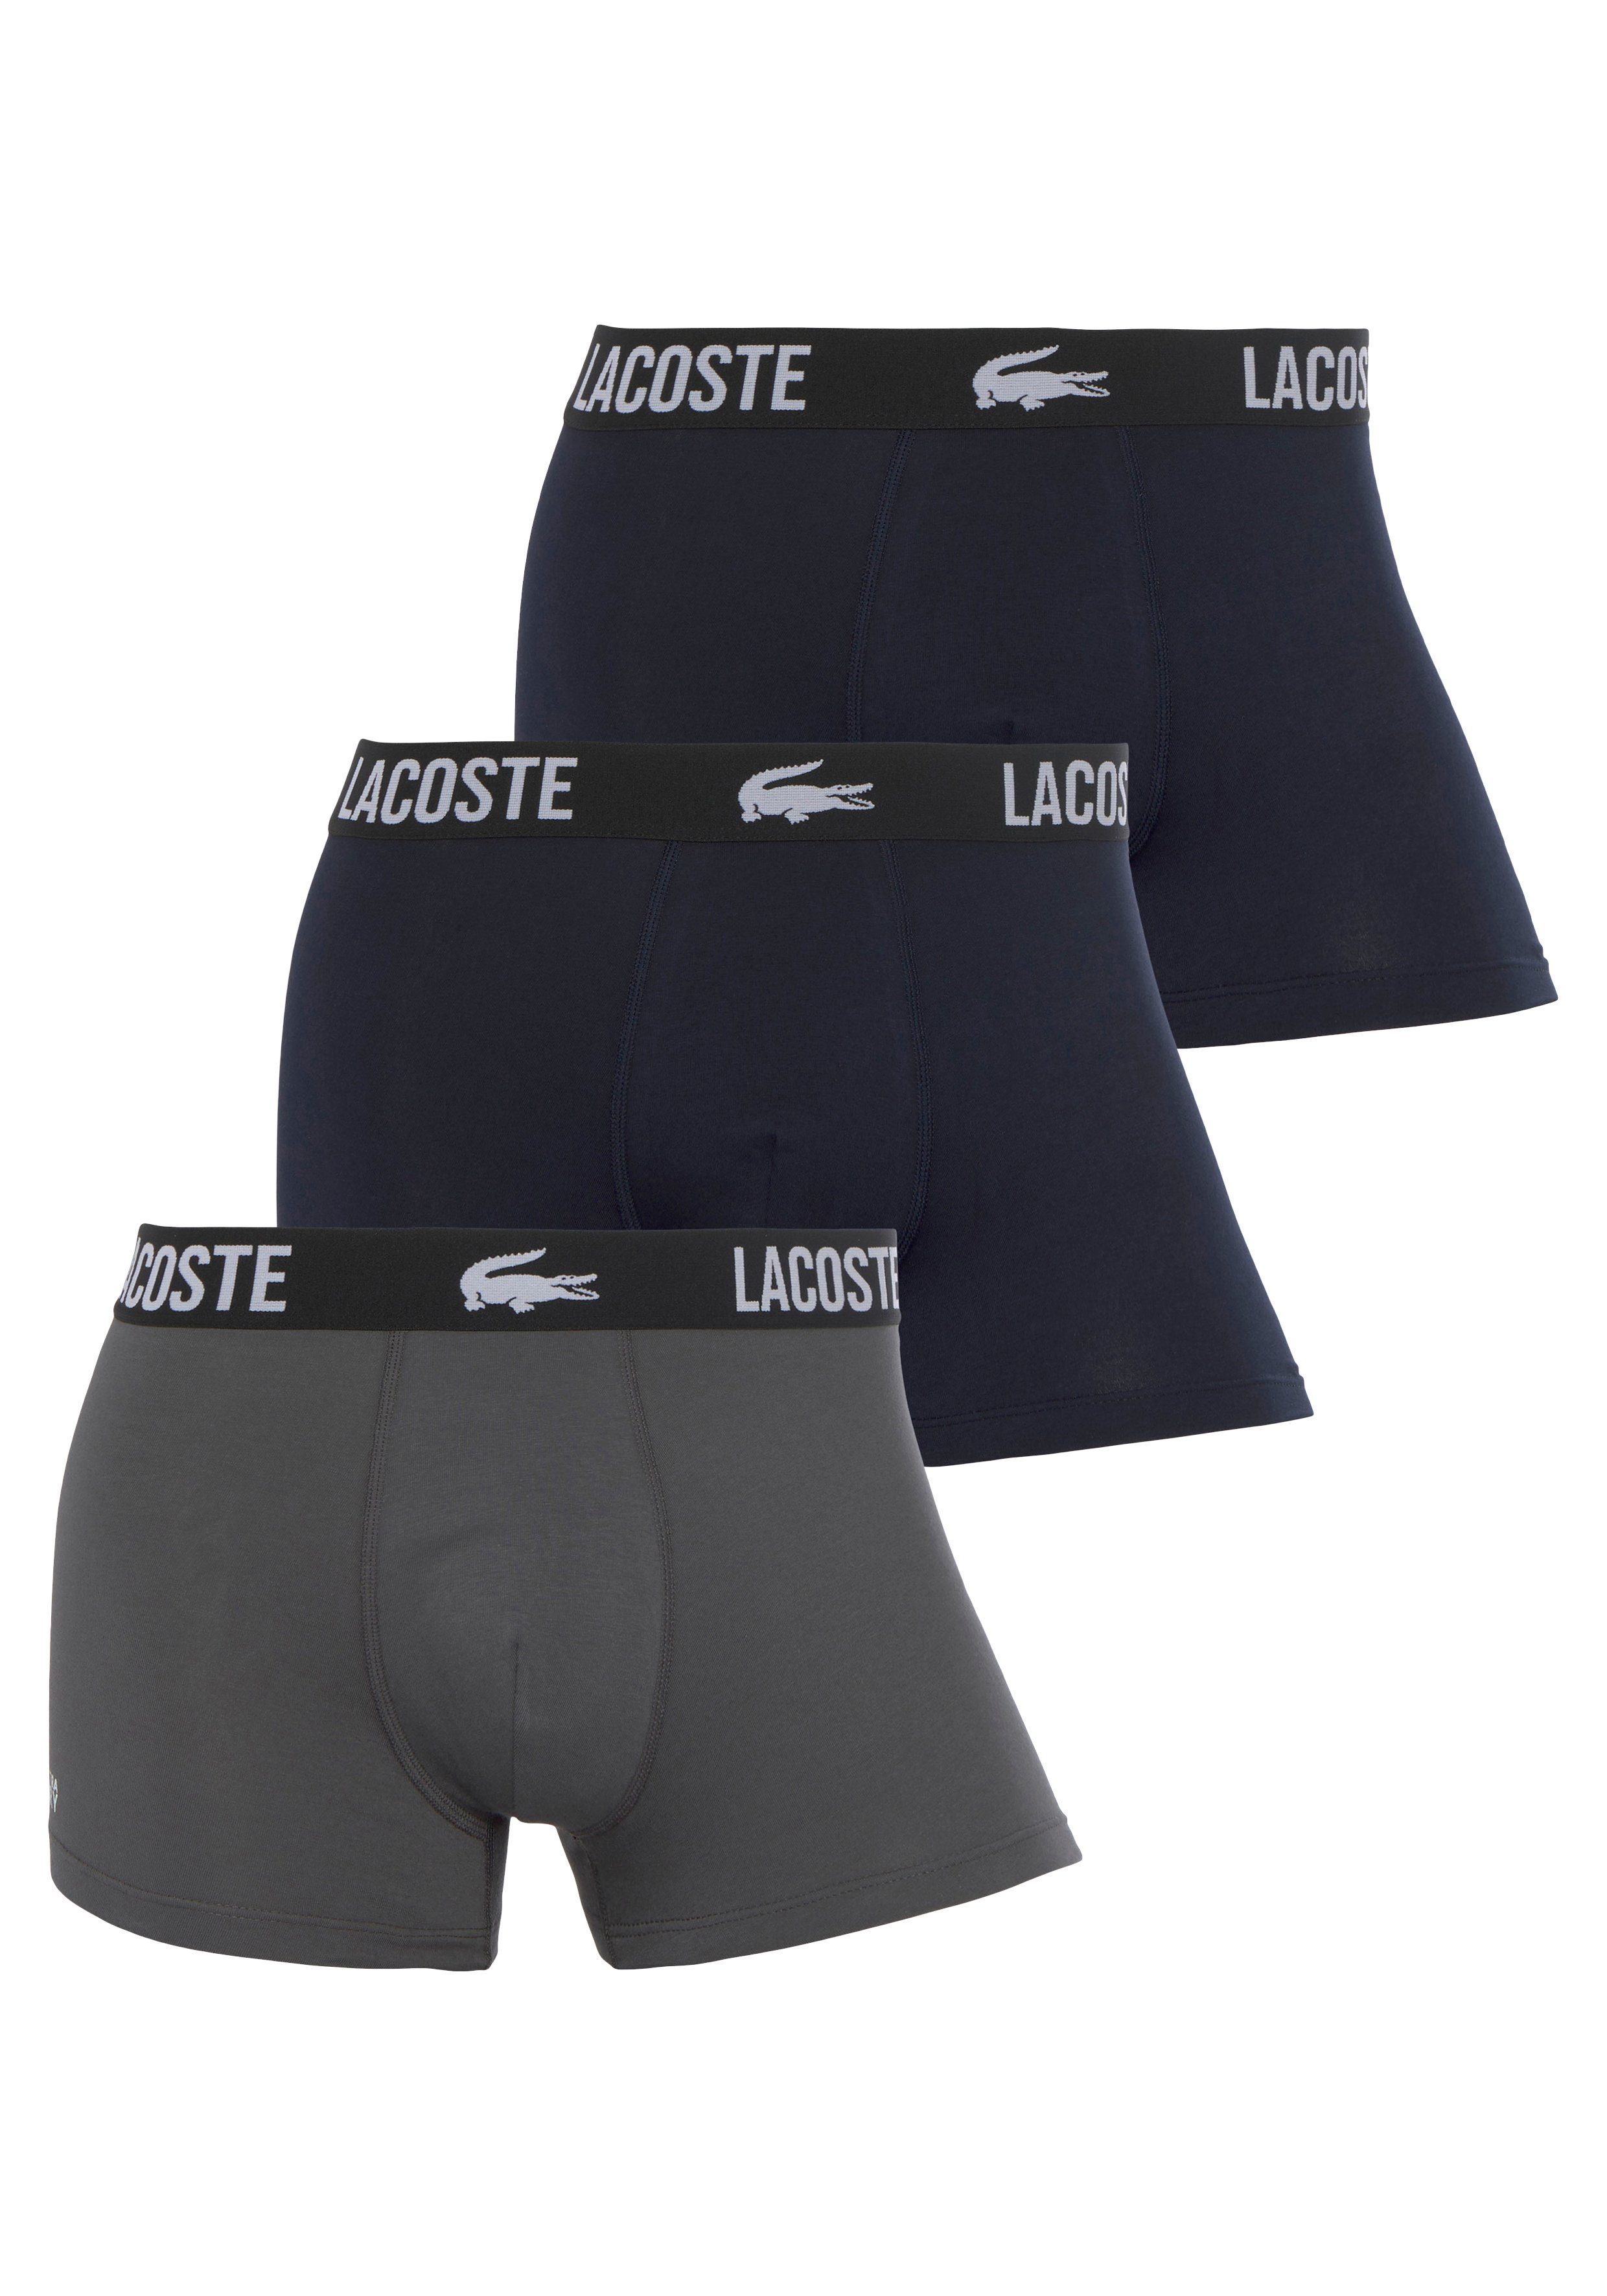 Lacoste Trunk eng Boxershorts Lacoste Herren Premium (Packung, 3er-Pack) aus Stretch-Baumwolle im 3er-Pack hellblau blau marine